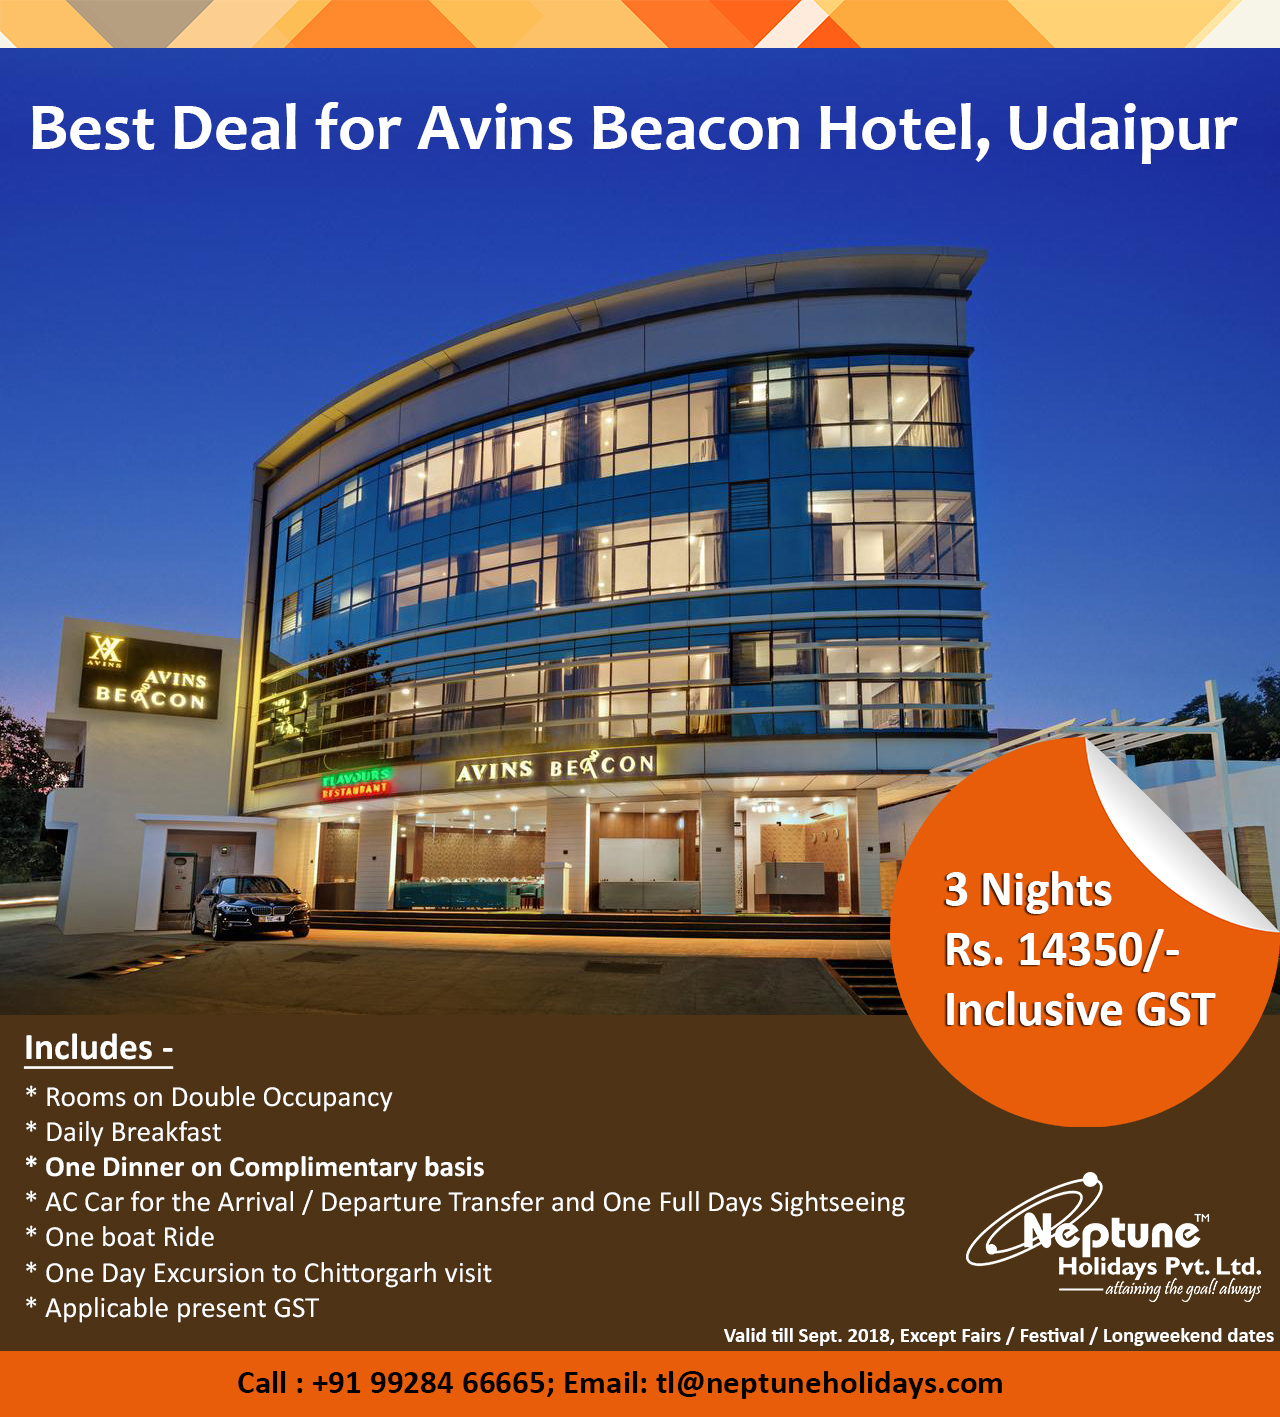 Avins Beacon Hotel, Udaipur